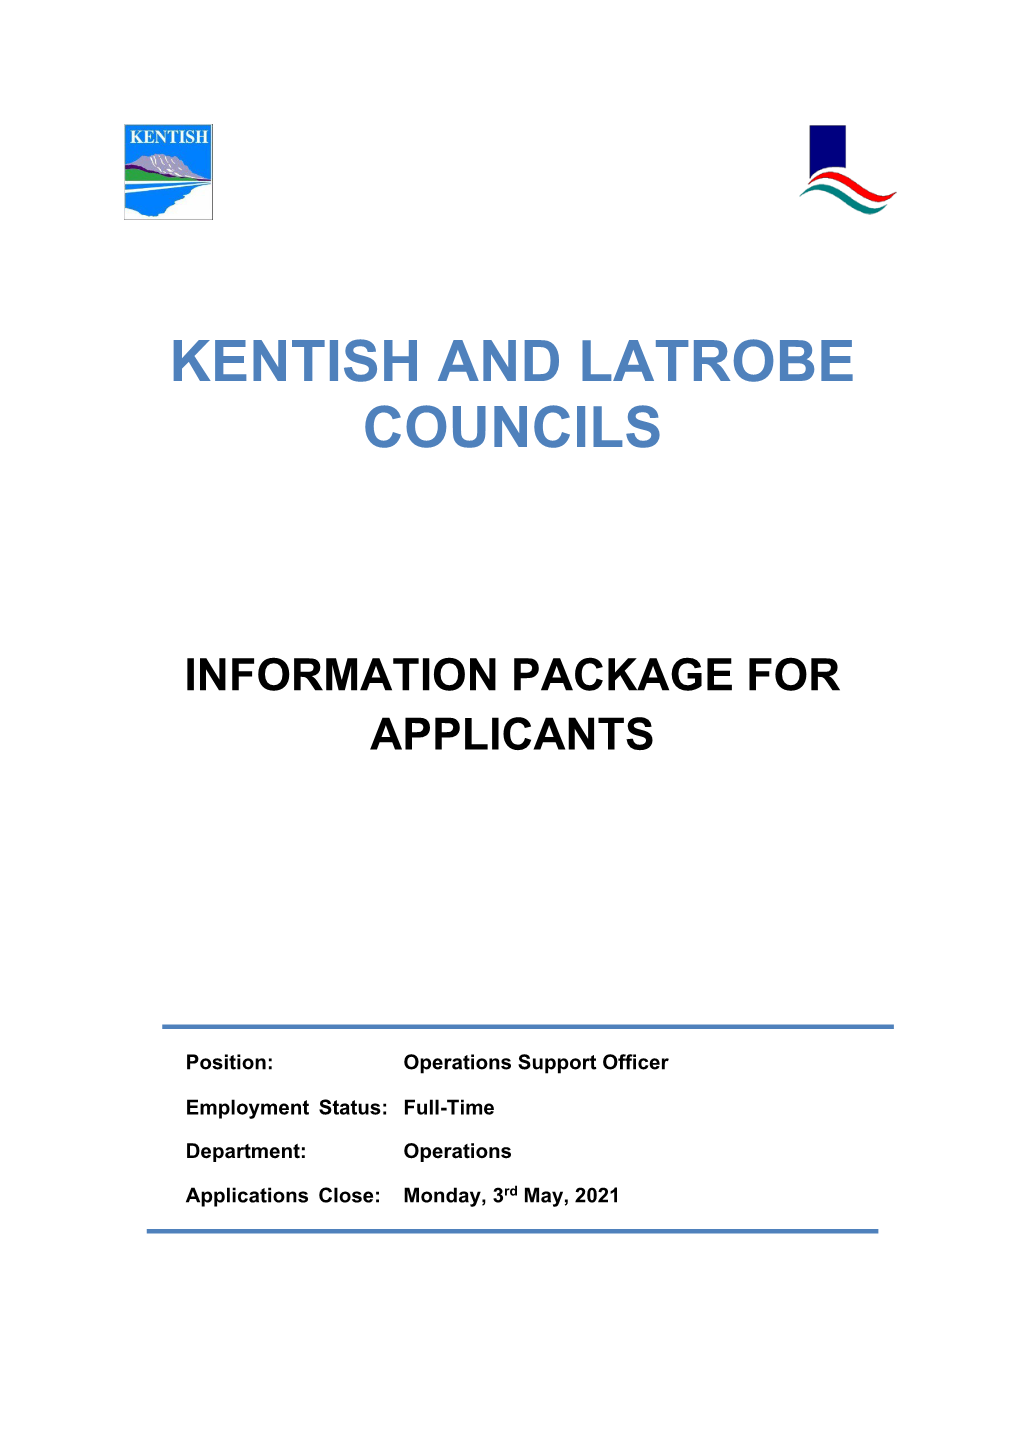 Kentish and Latrobe Councils